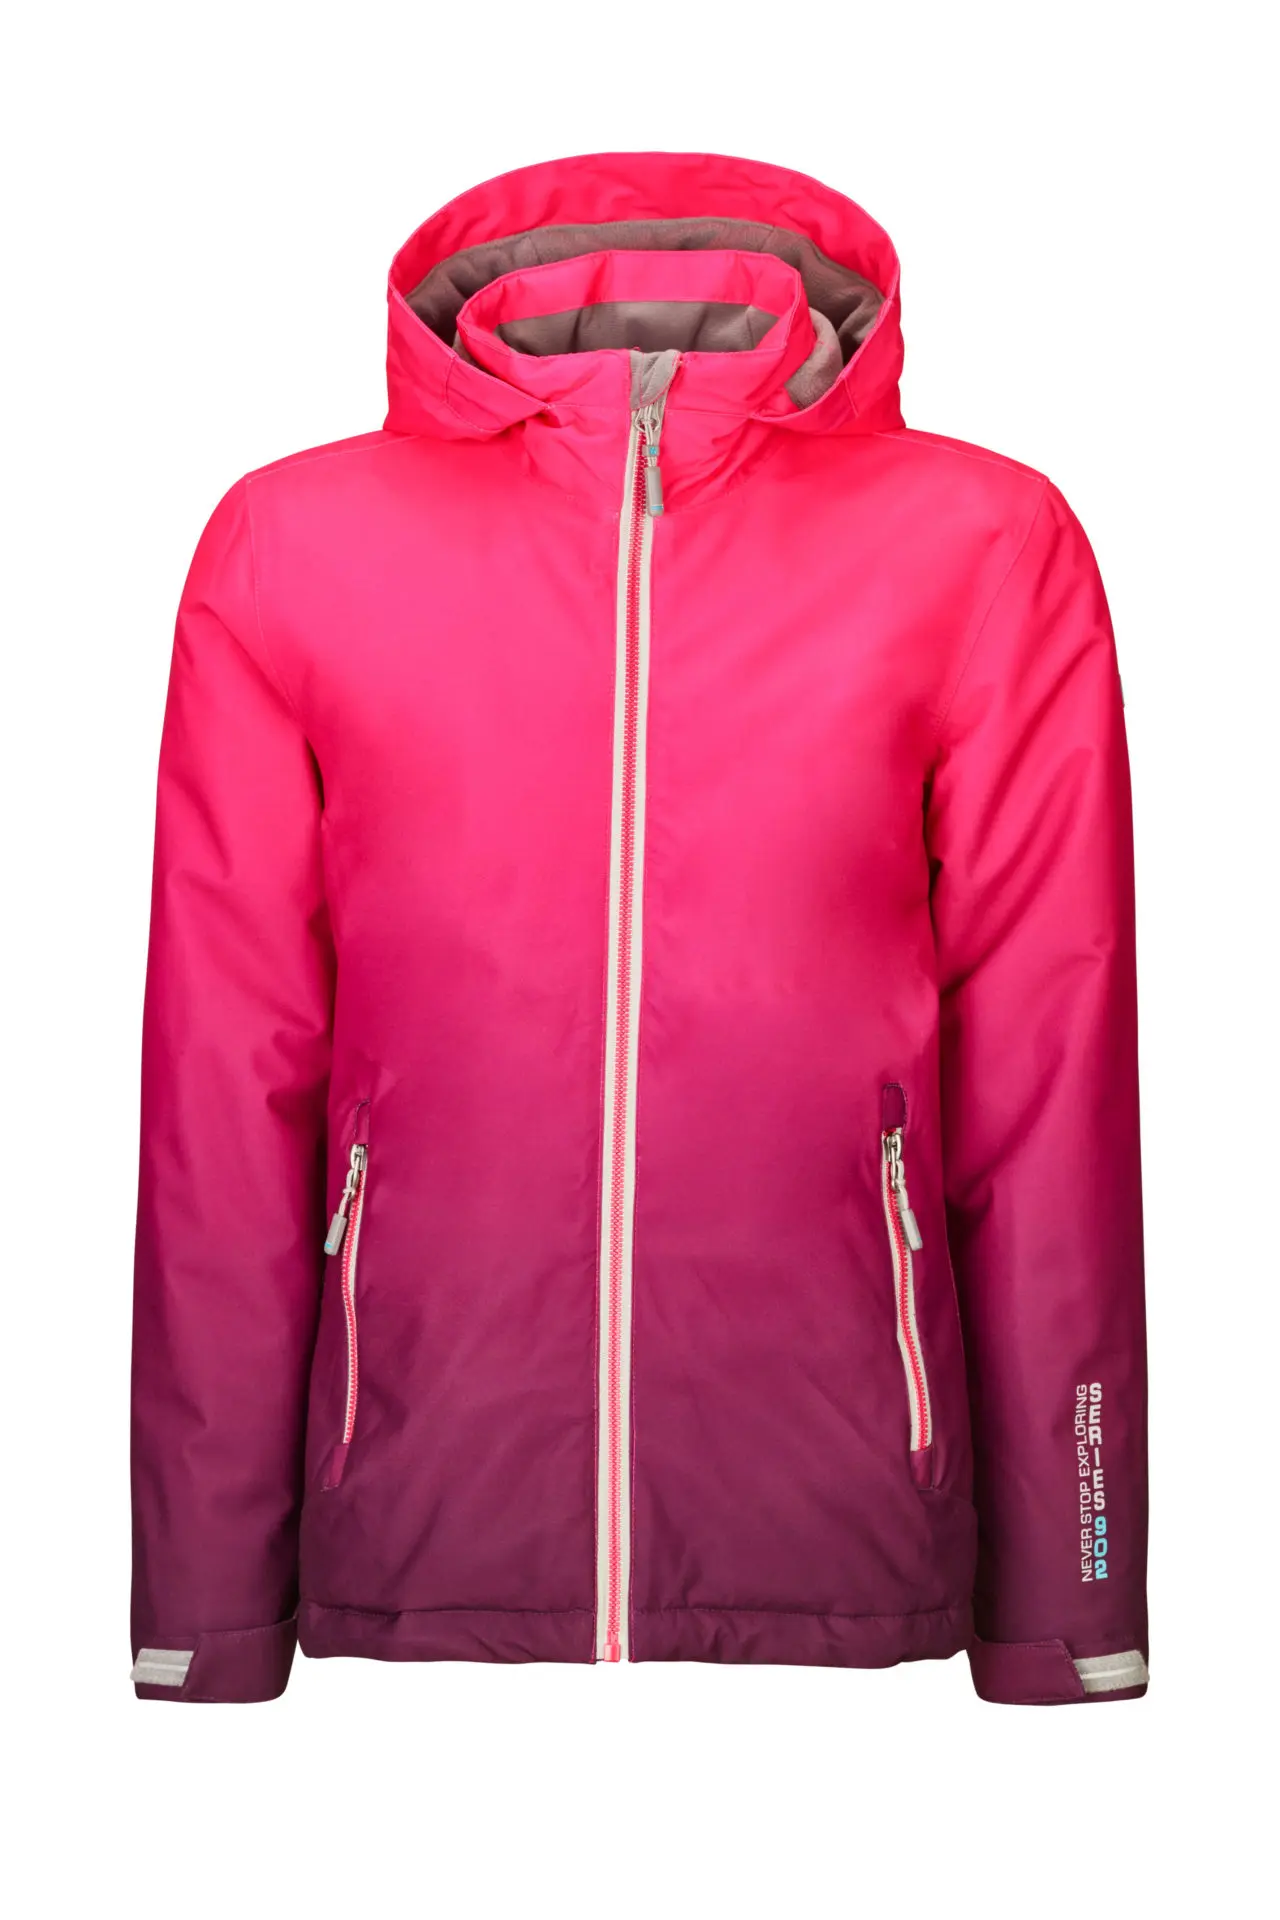 Killtec Girl's Grenda Jr Function Jacket with Hood - Northern Ski Works